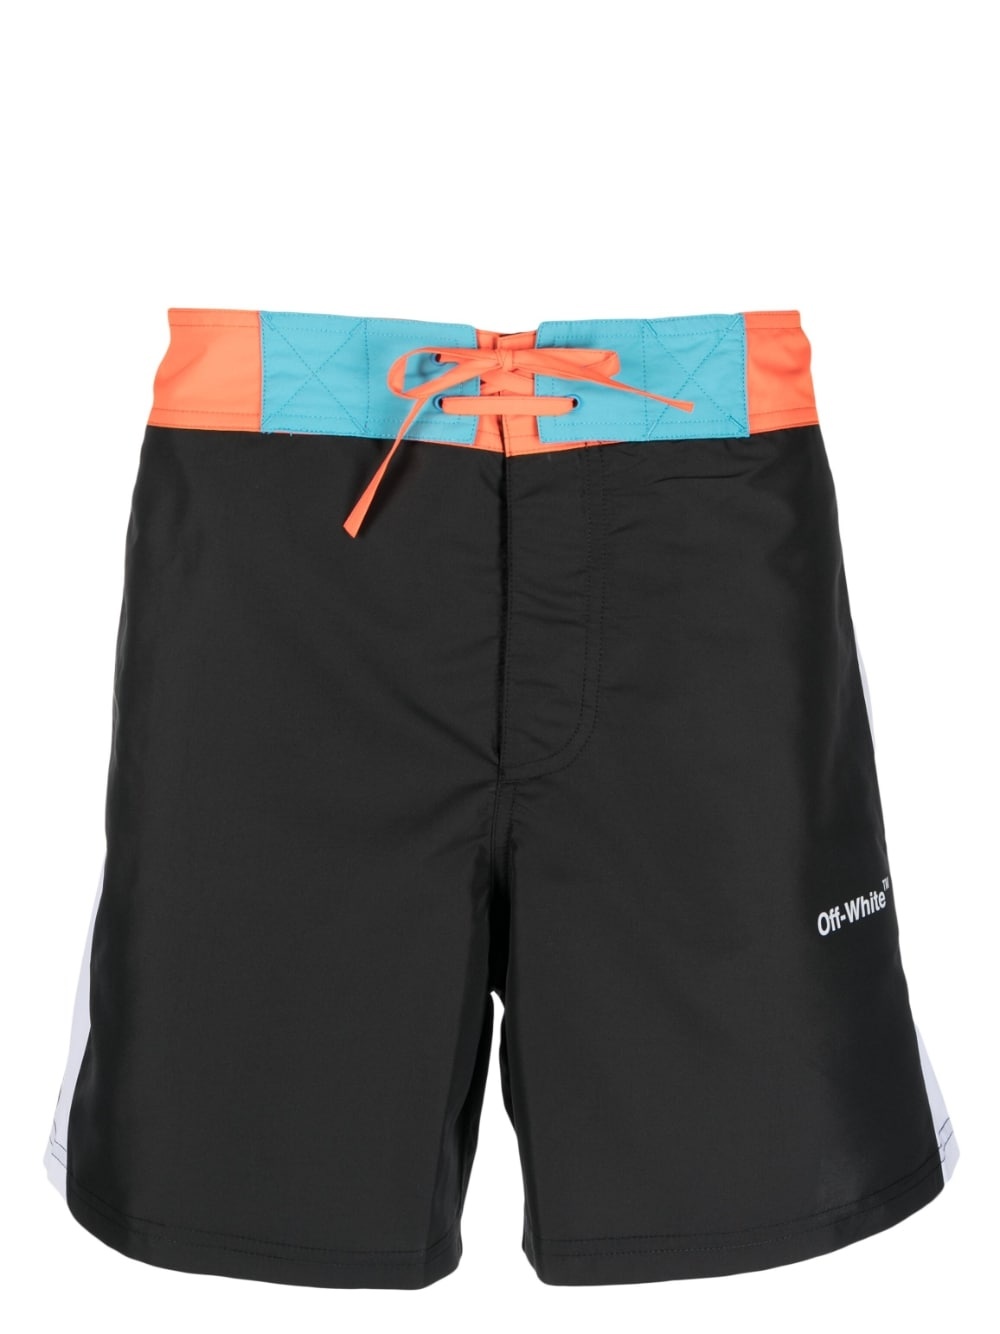 Arrows print swim shorts - 1